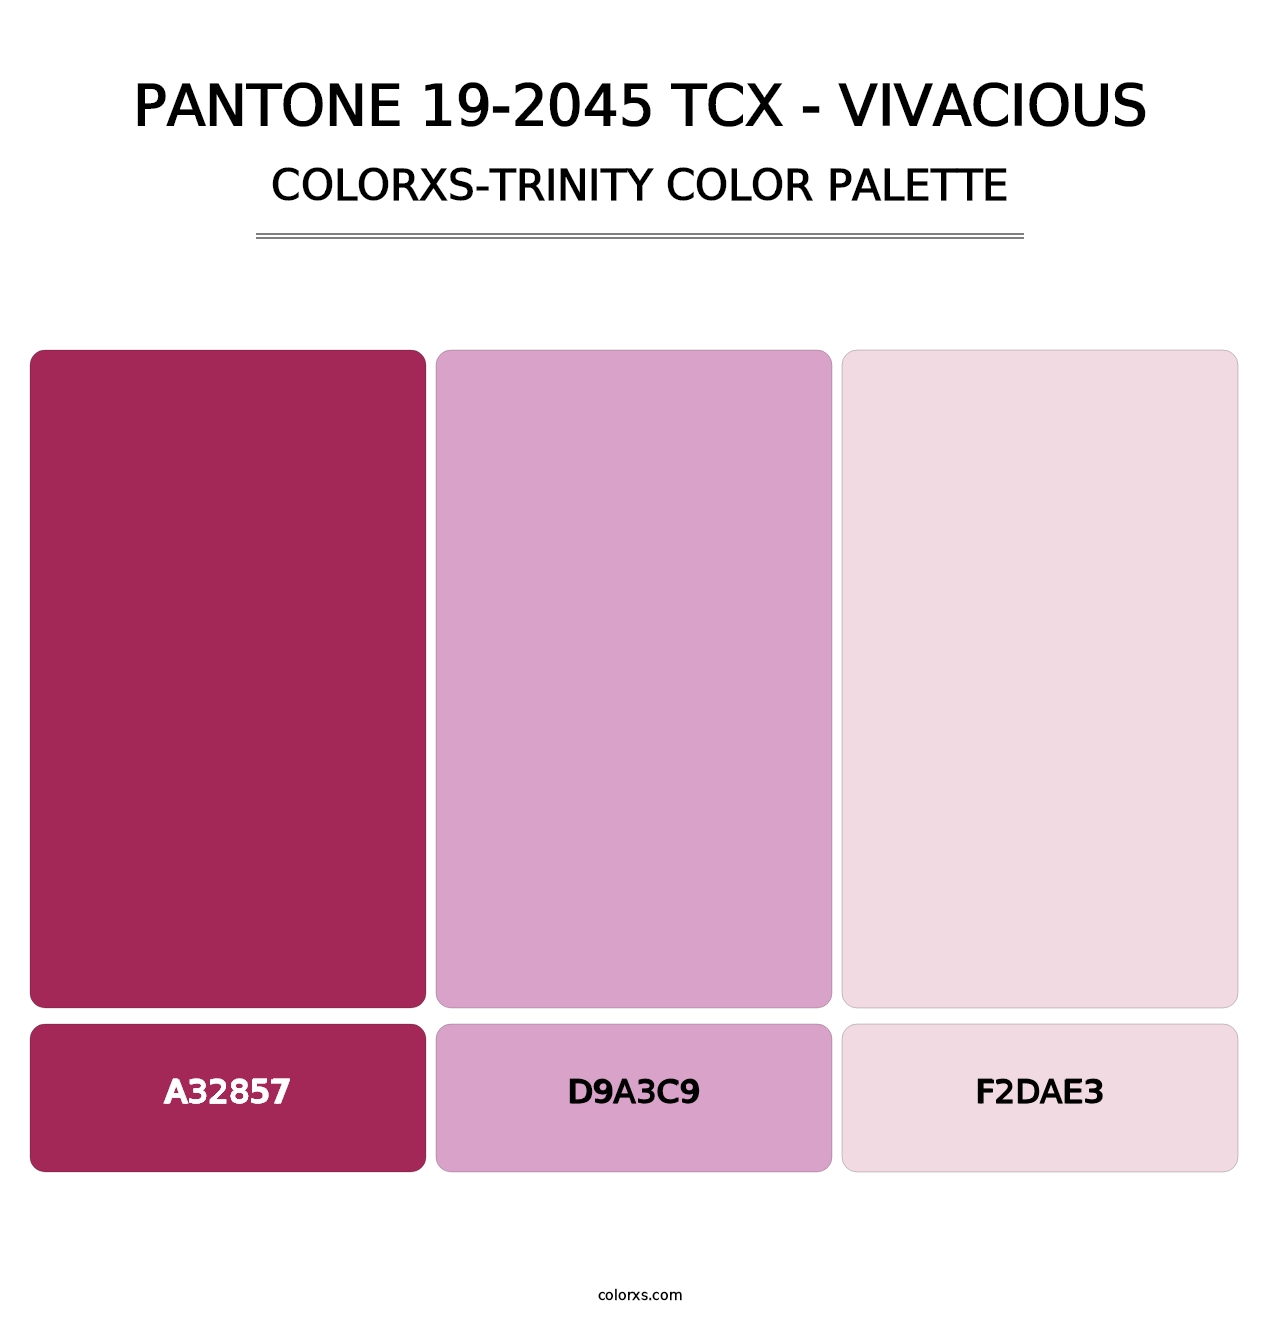 PANTONE 19-2045 TCX - Vivacious - Colorxs Trinity Palette